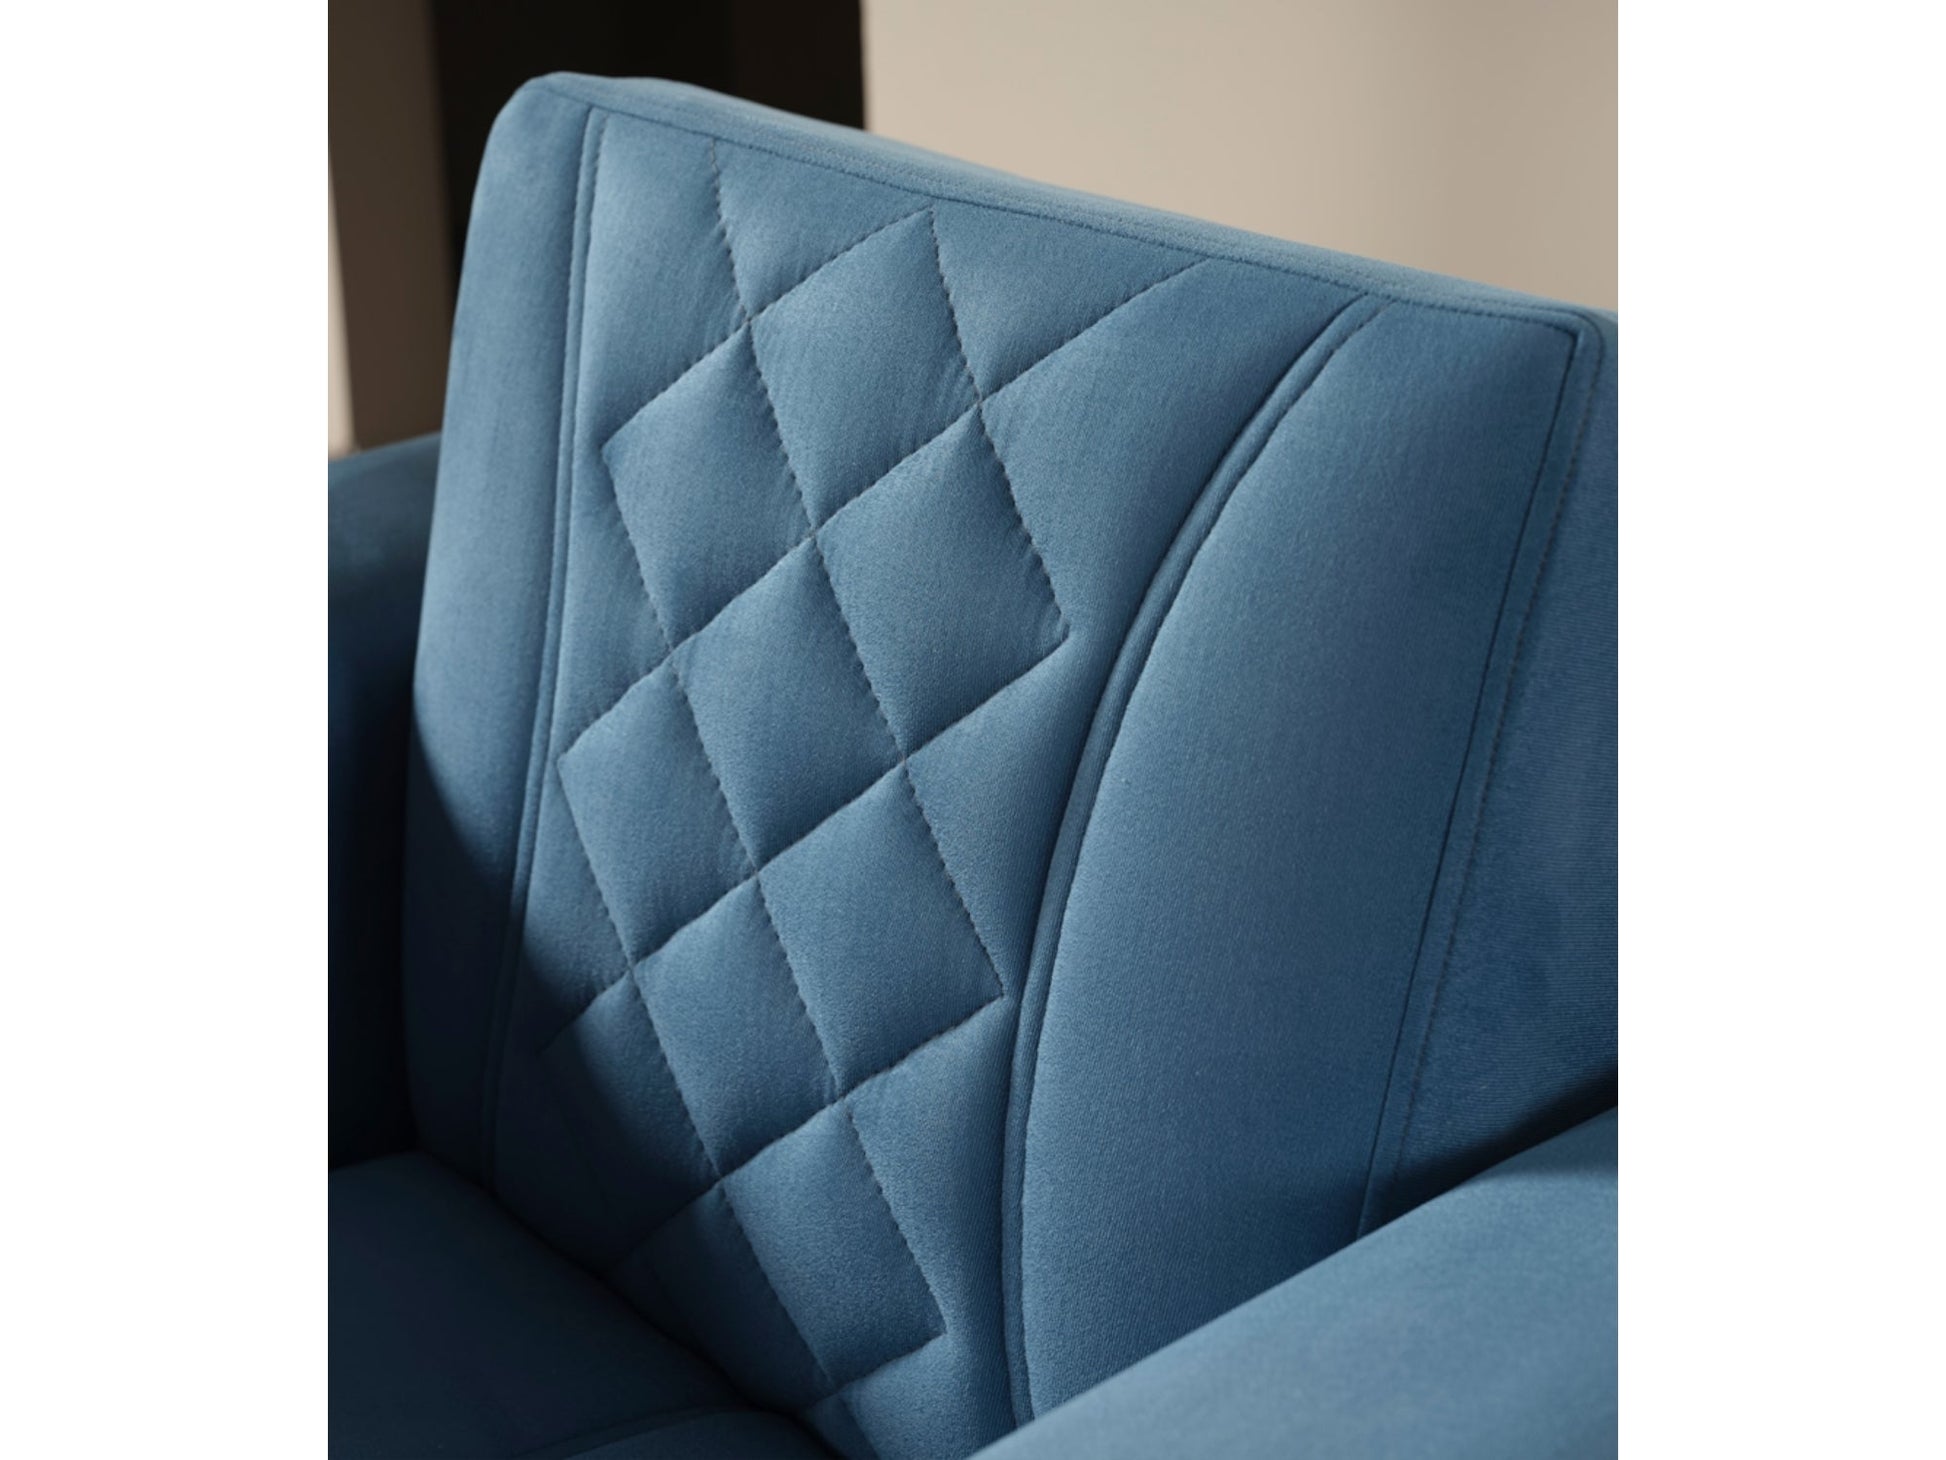 Convertible Livingroom (2 Sofa & 2 Chair) Blue